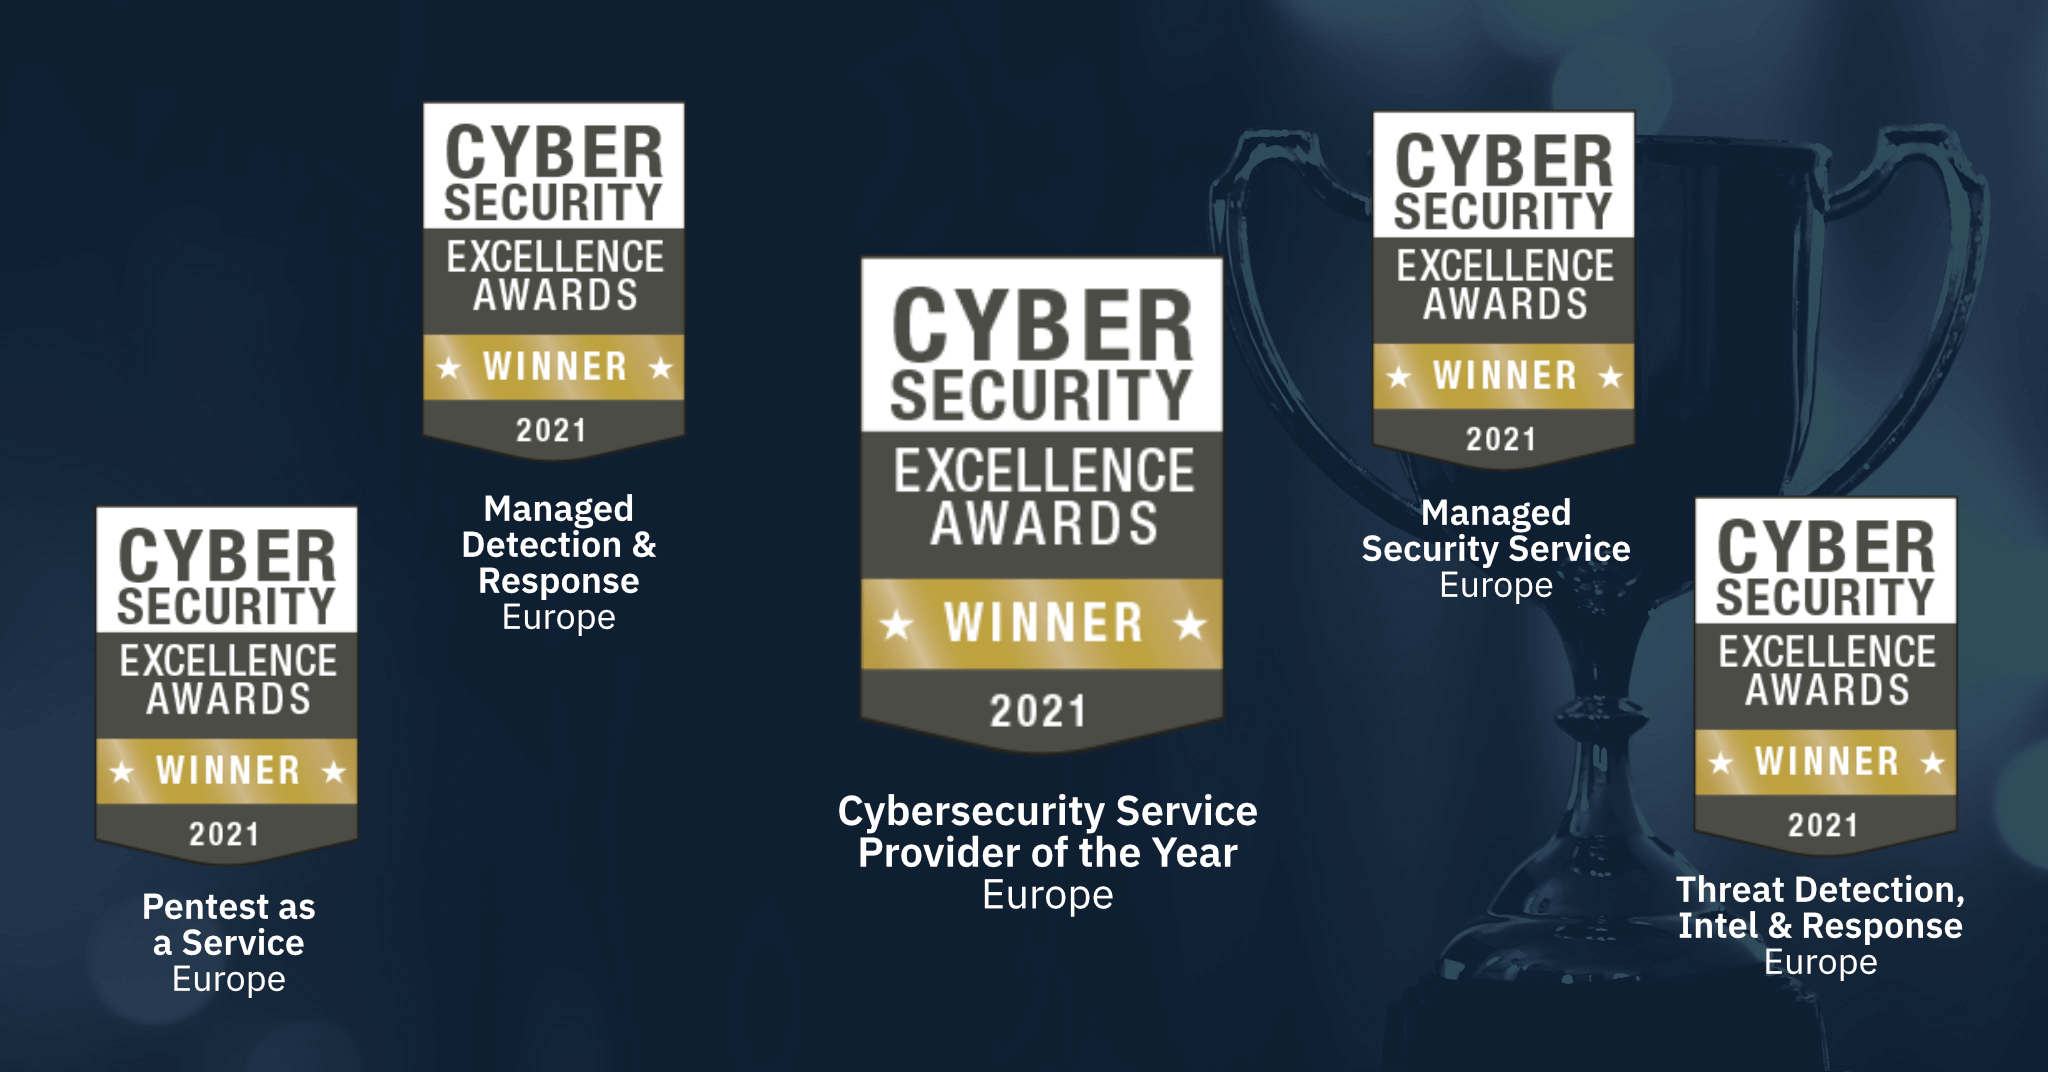 Cyber security winner 2021 logos